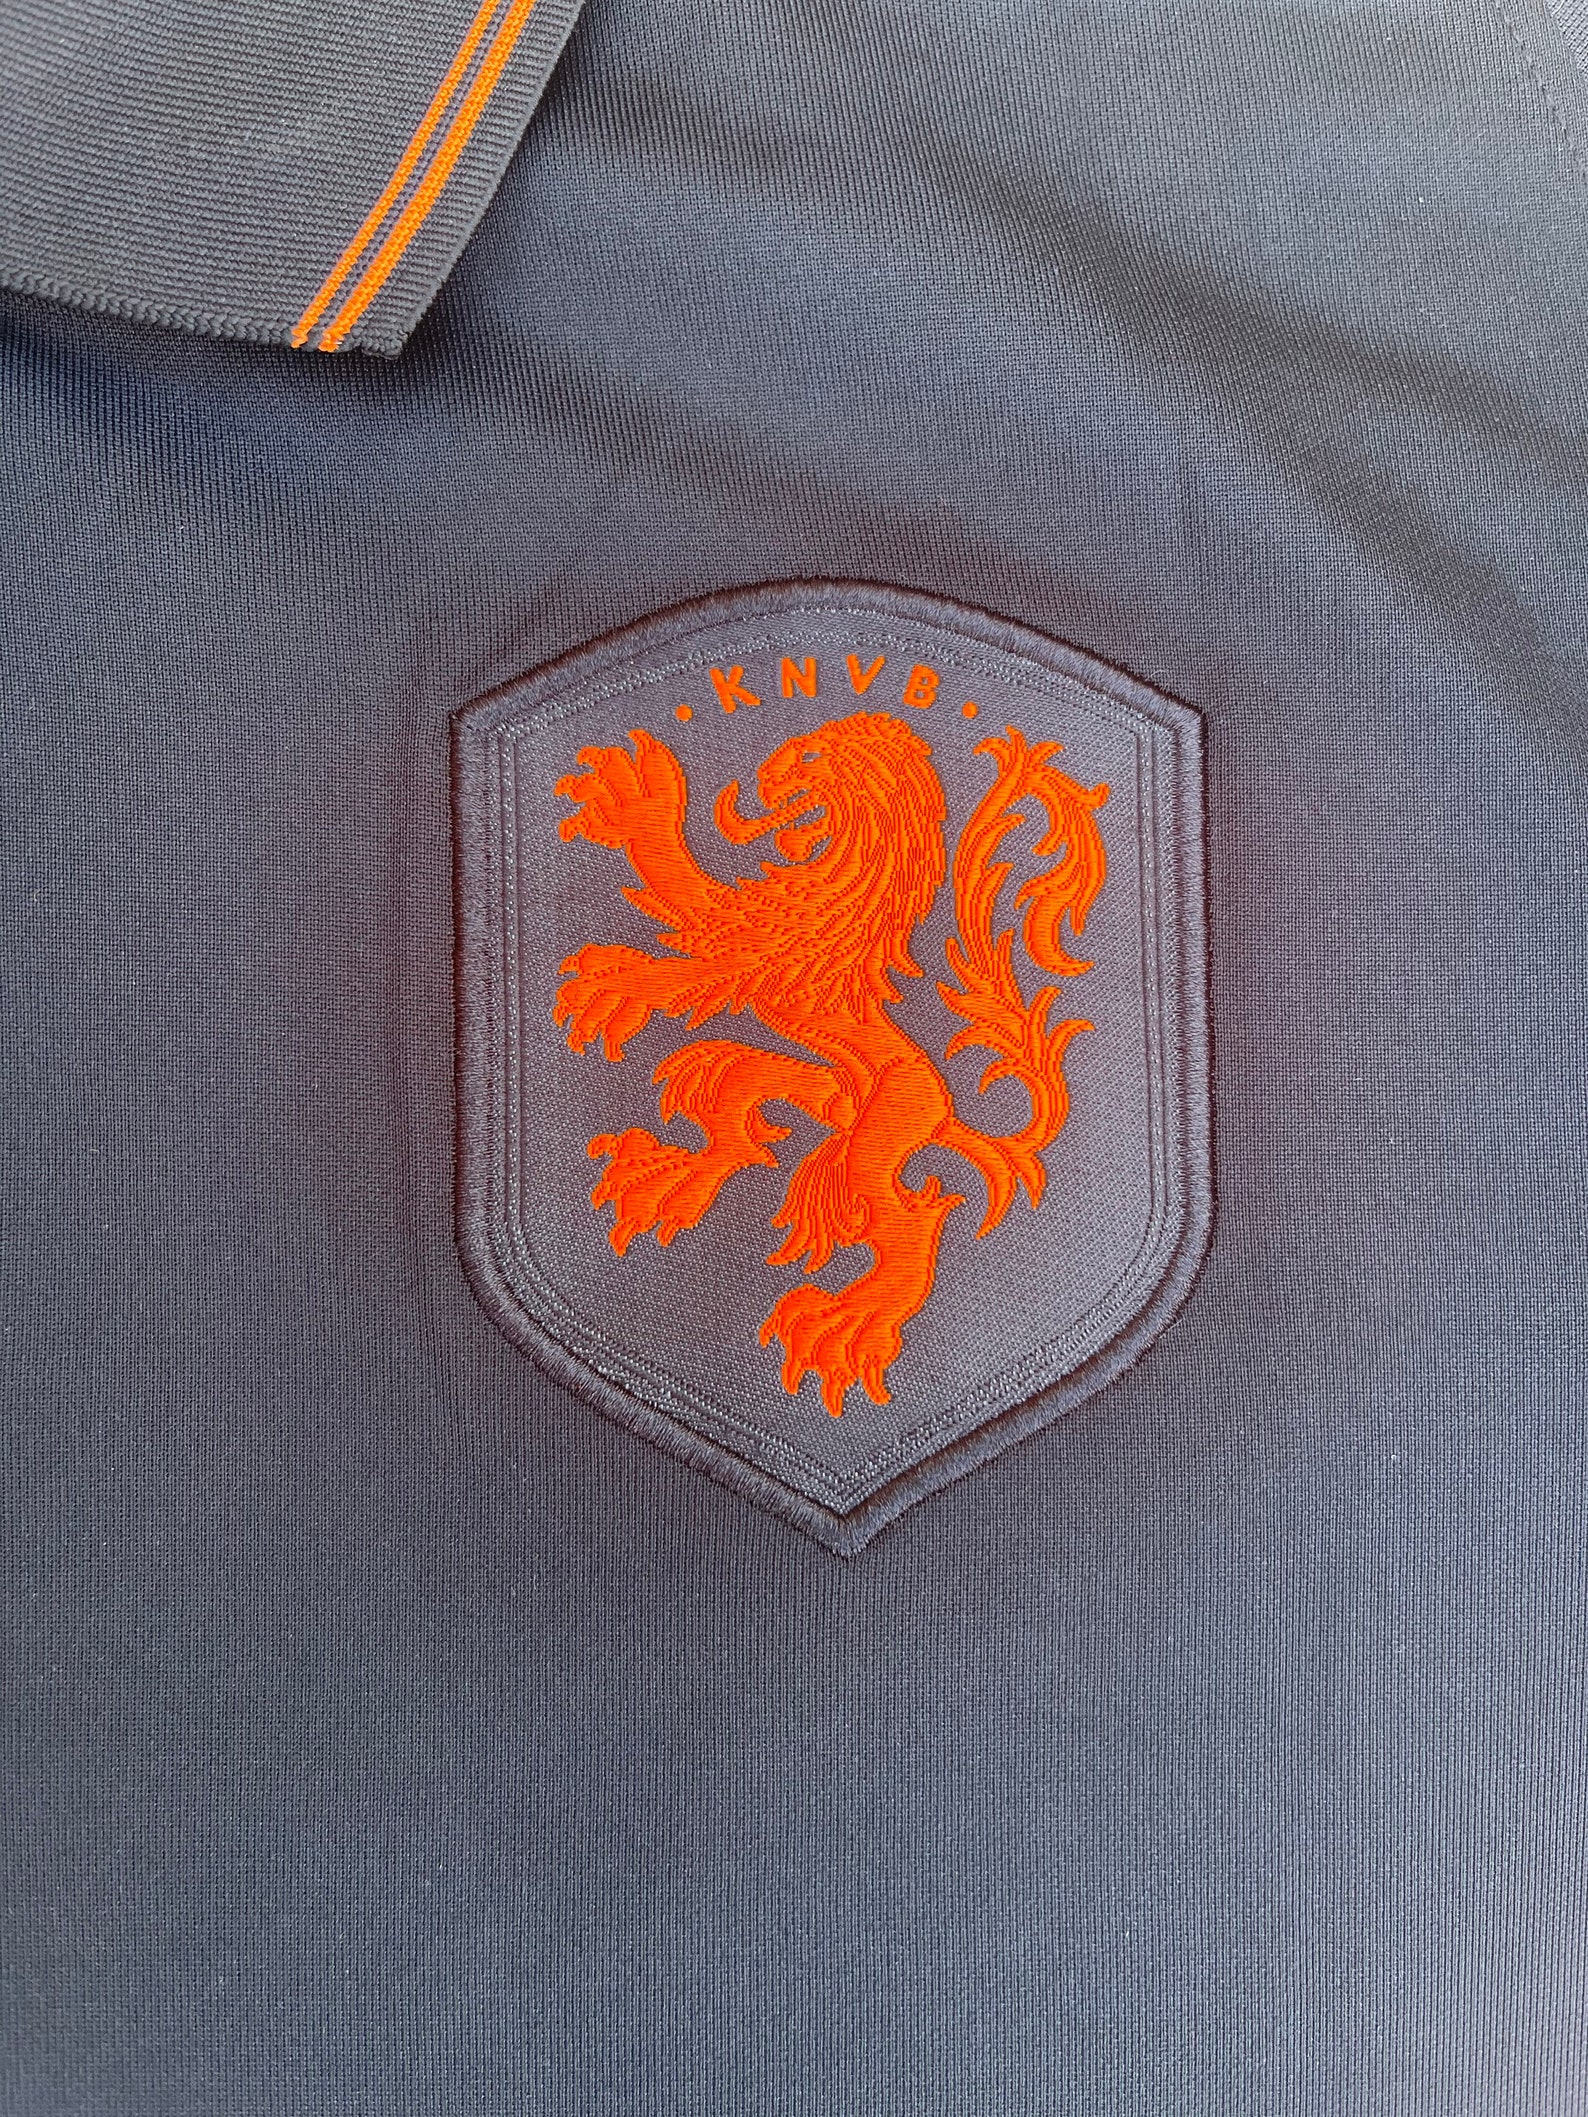 Frankie De Jong Nederland away soccer jersey 20/21 | Etsy